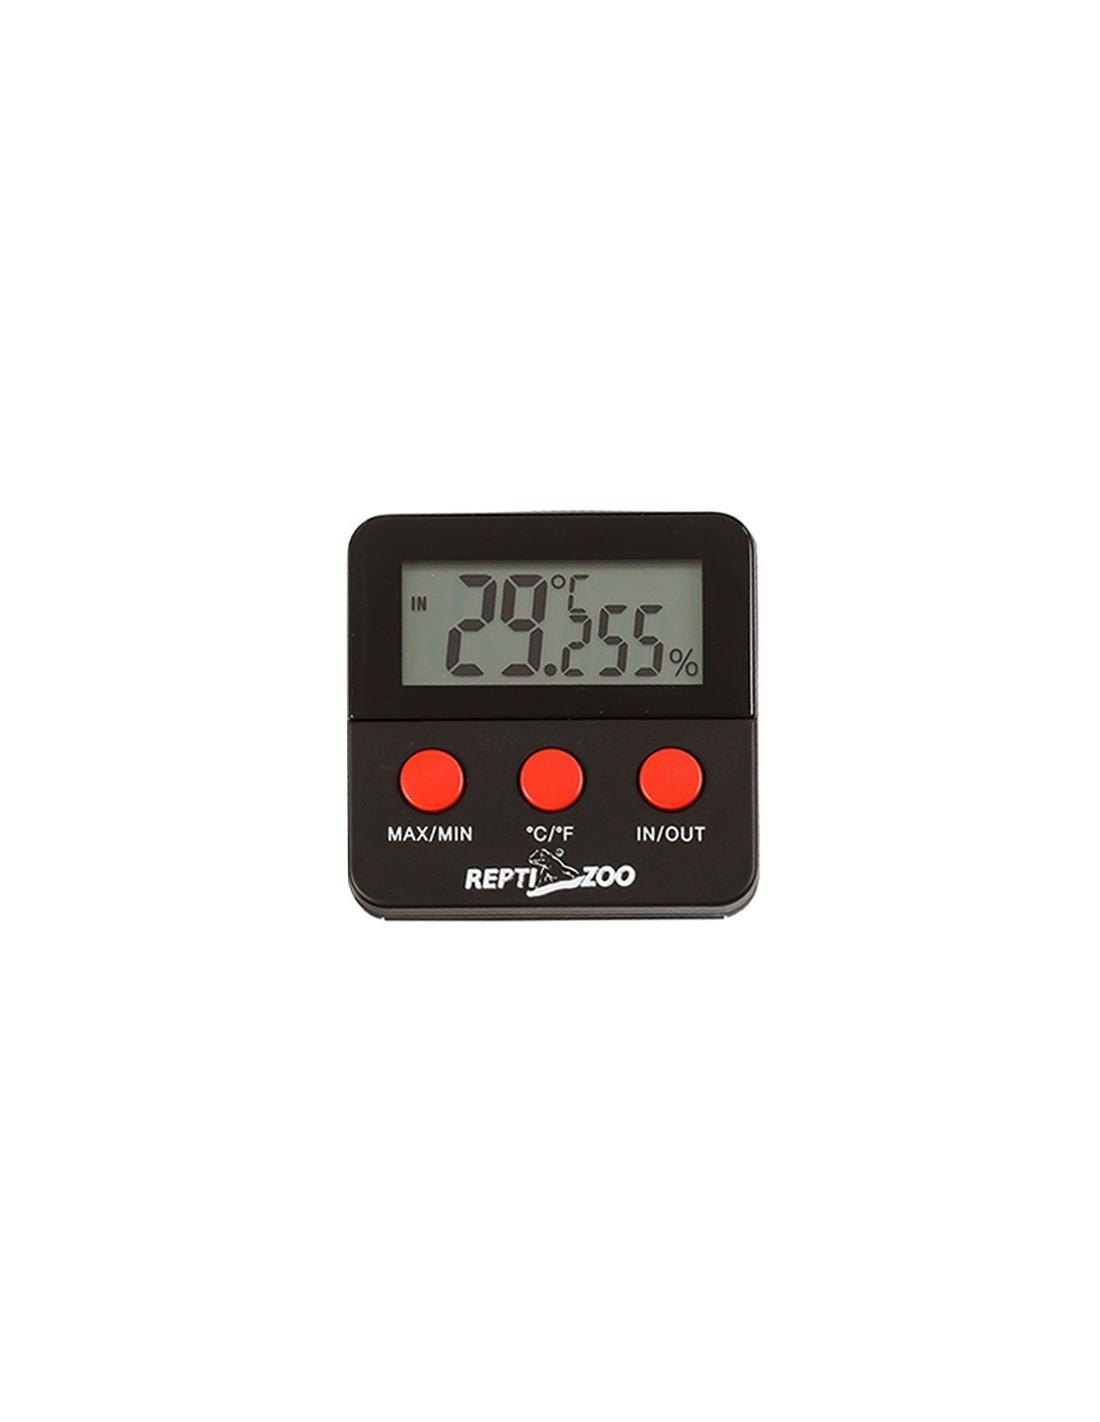 Thermometre + Hygrometre Digital Avec Sonde - Reptizoo